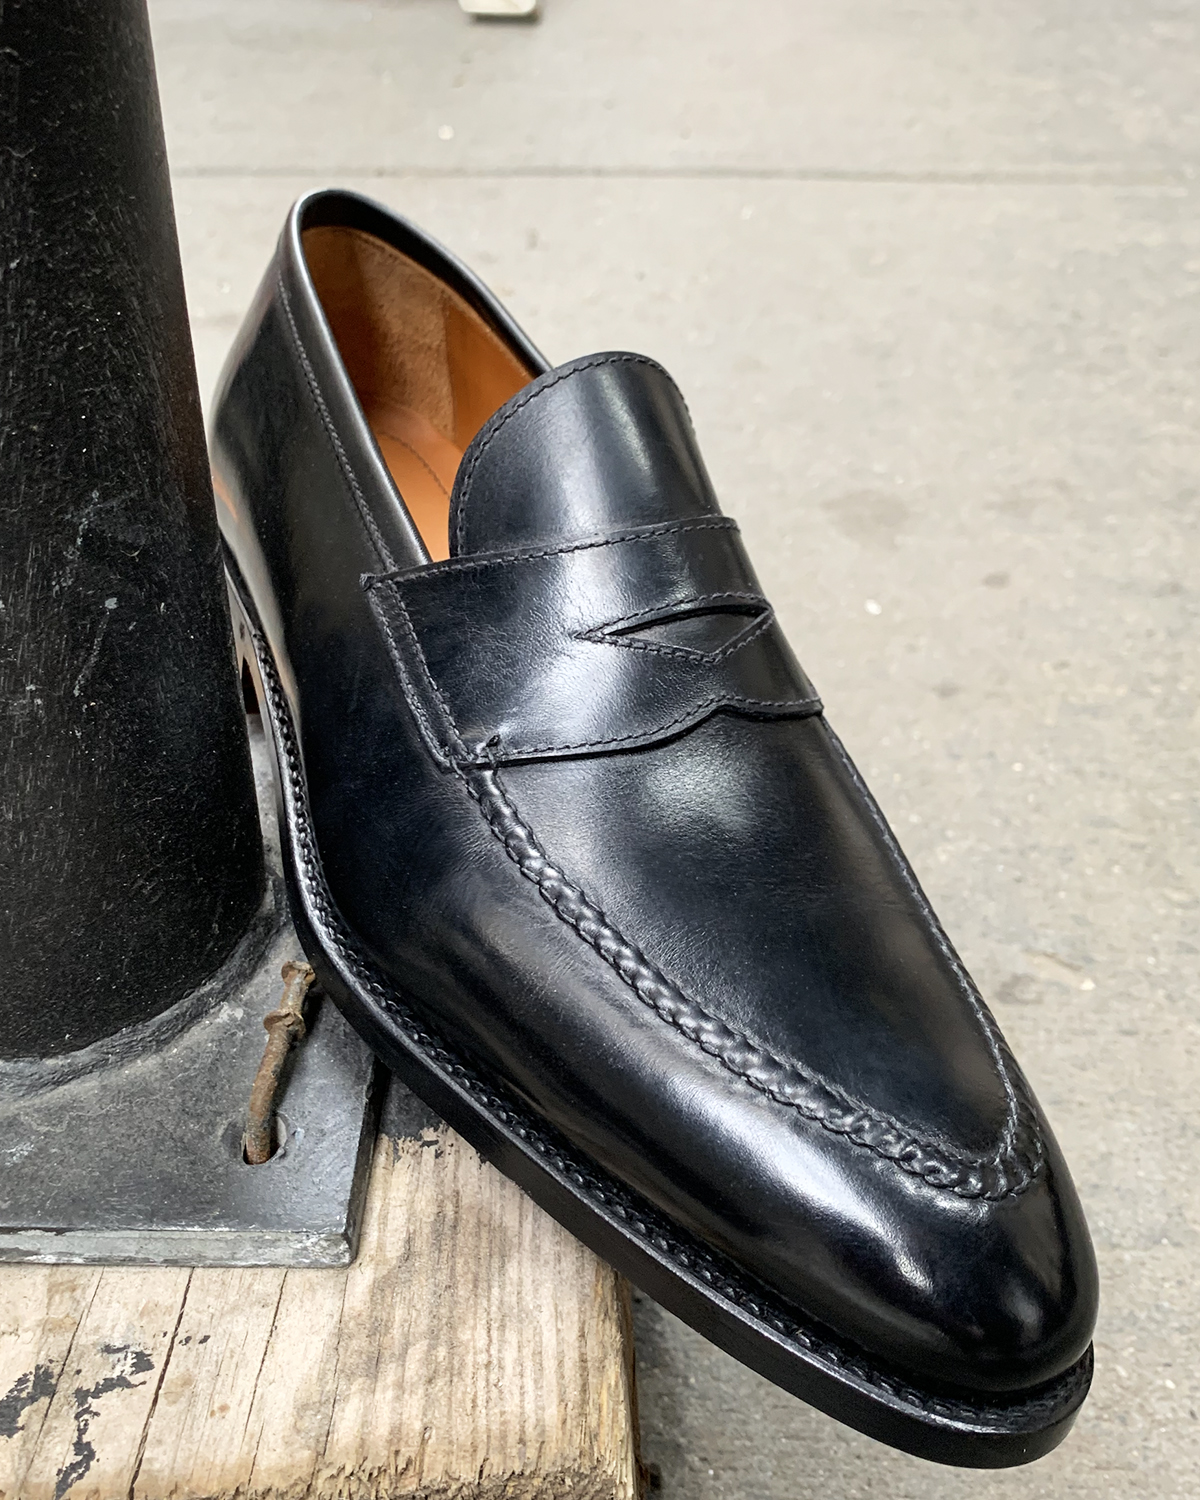 Principe - Bontoni: Handcrafted Italian Men's Shoes